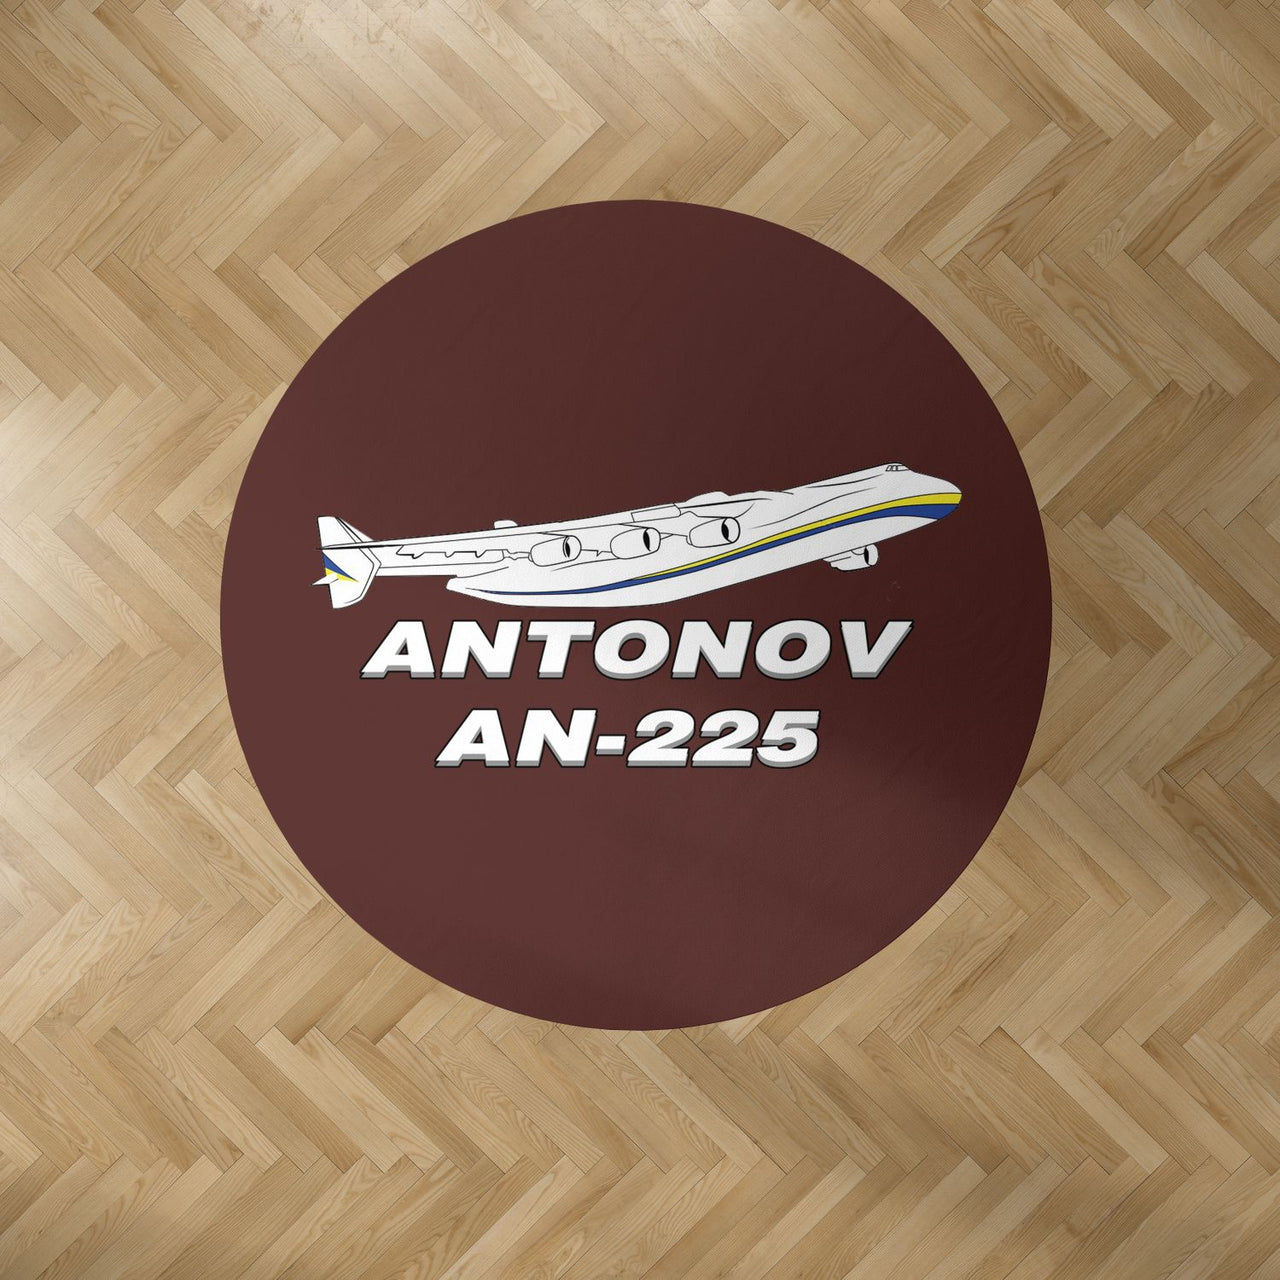 Antonov AN-225 (27) Designed Carpet & Floor Mats (Round)